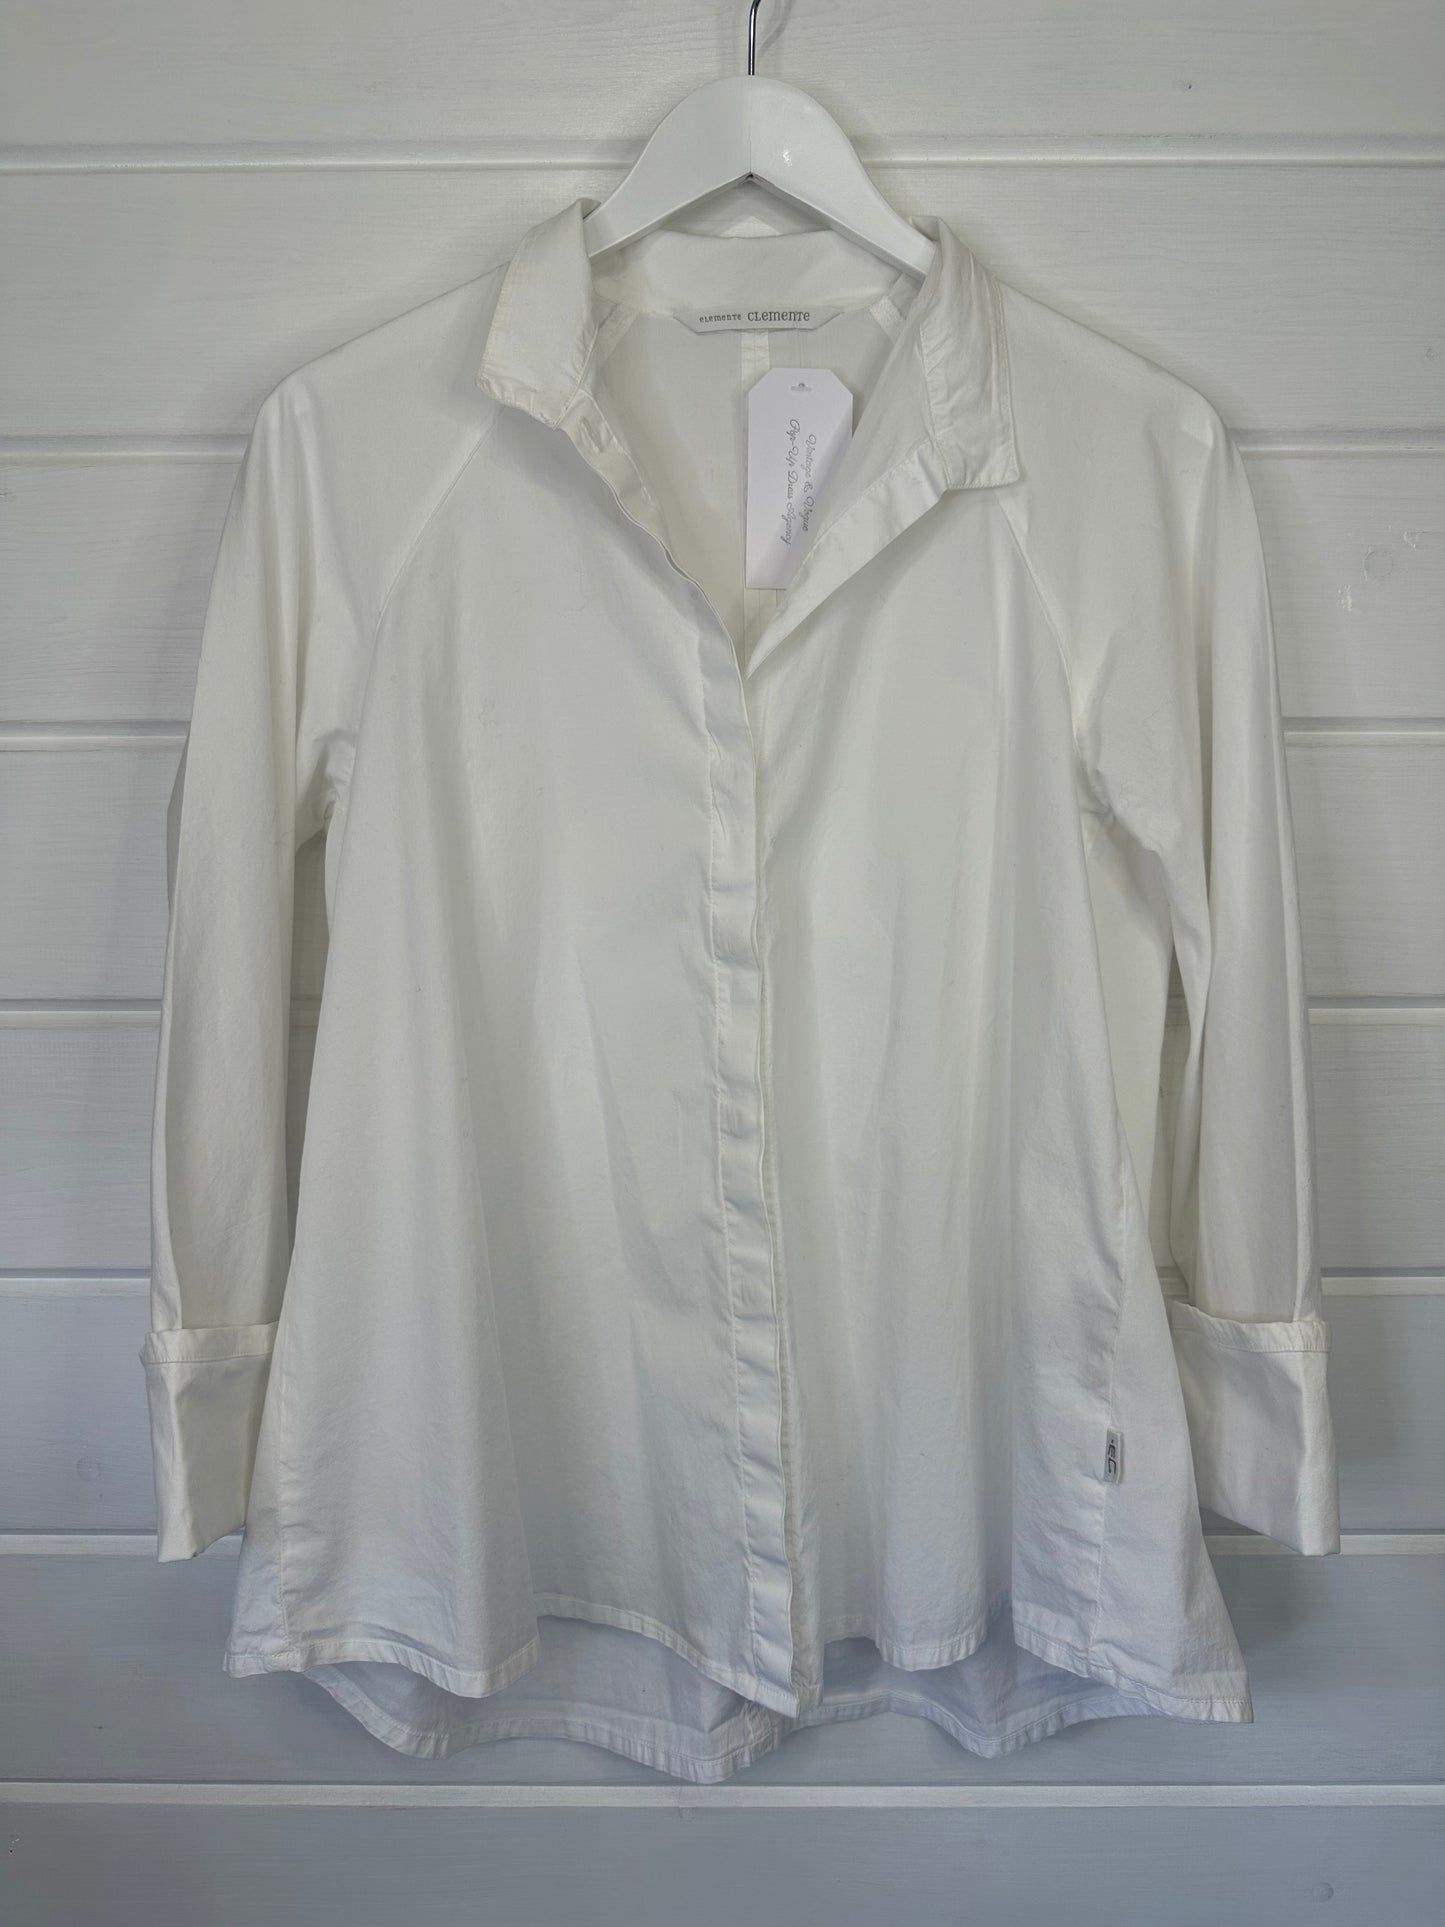 Elemente Clemente White Shirt - Size 1